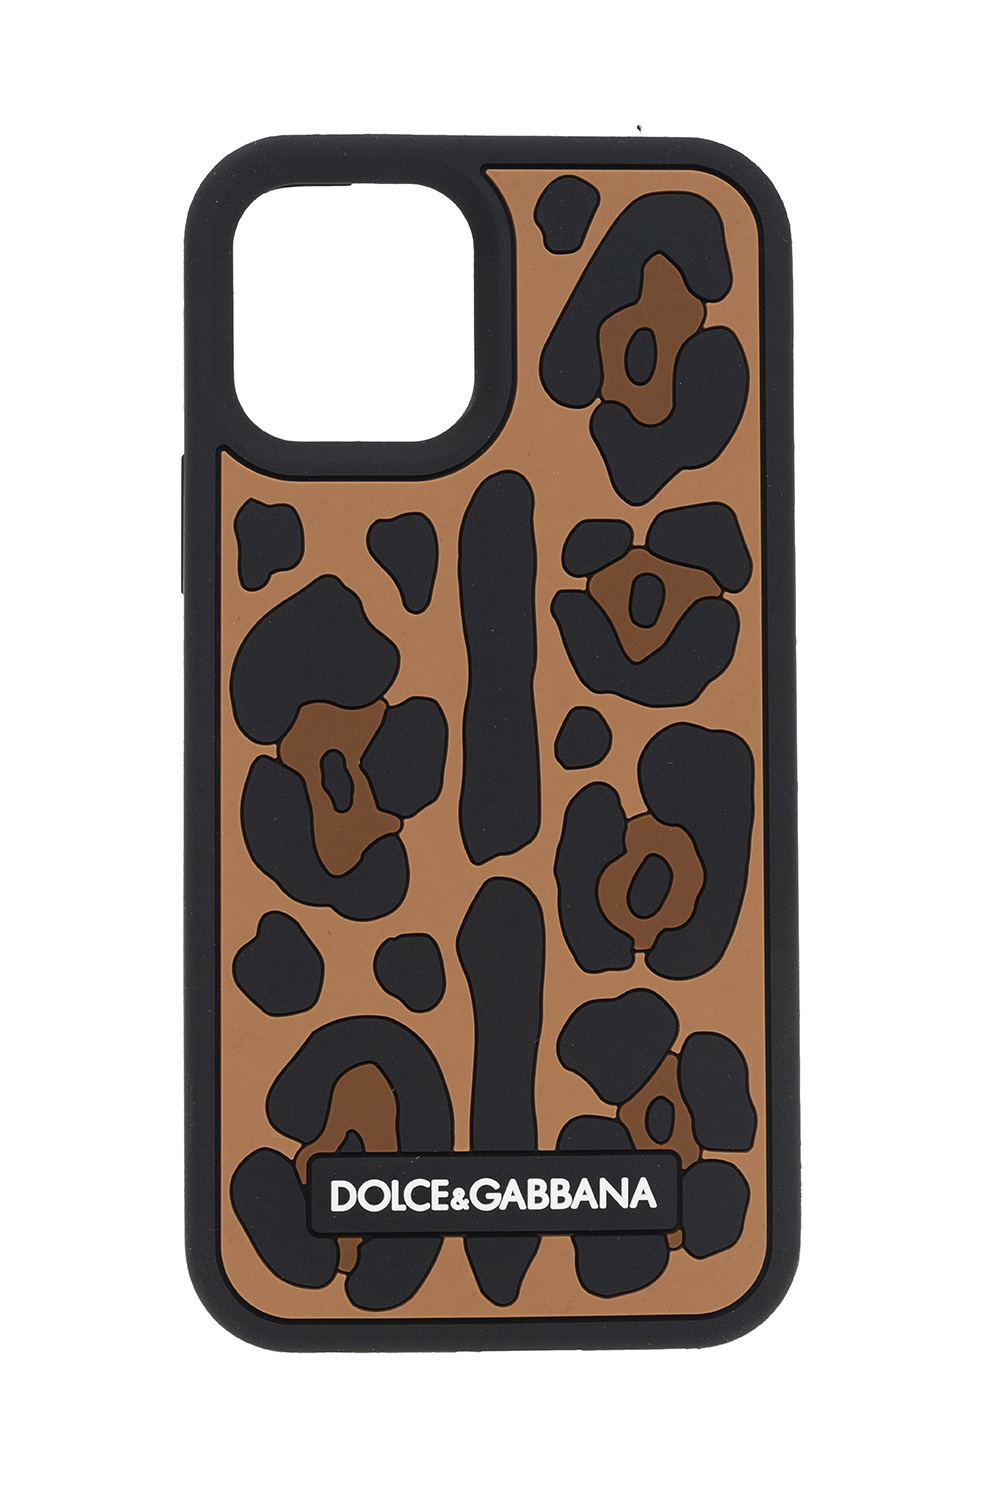 Ramkoers boog voorbeeld IetpShops Libya - Mounse Dolce Gabbana DG5039 1551 - iPhone 12 Pro Max case  Dolce & Gabbana